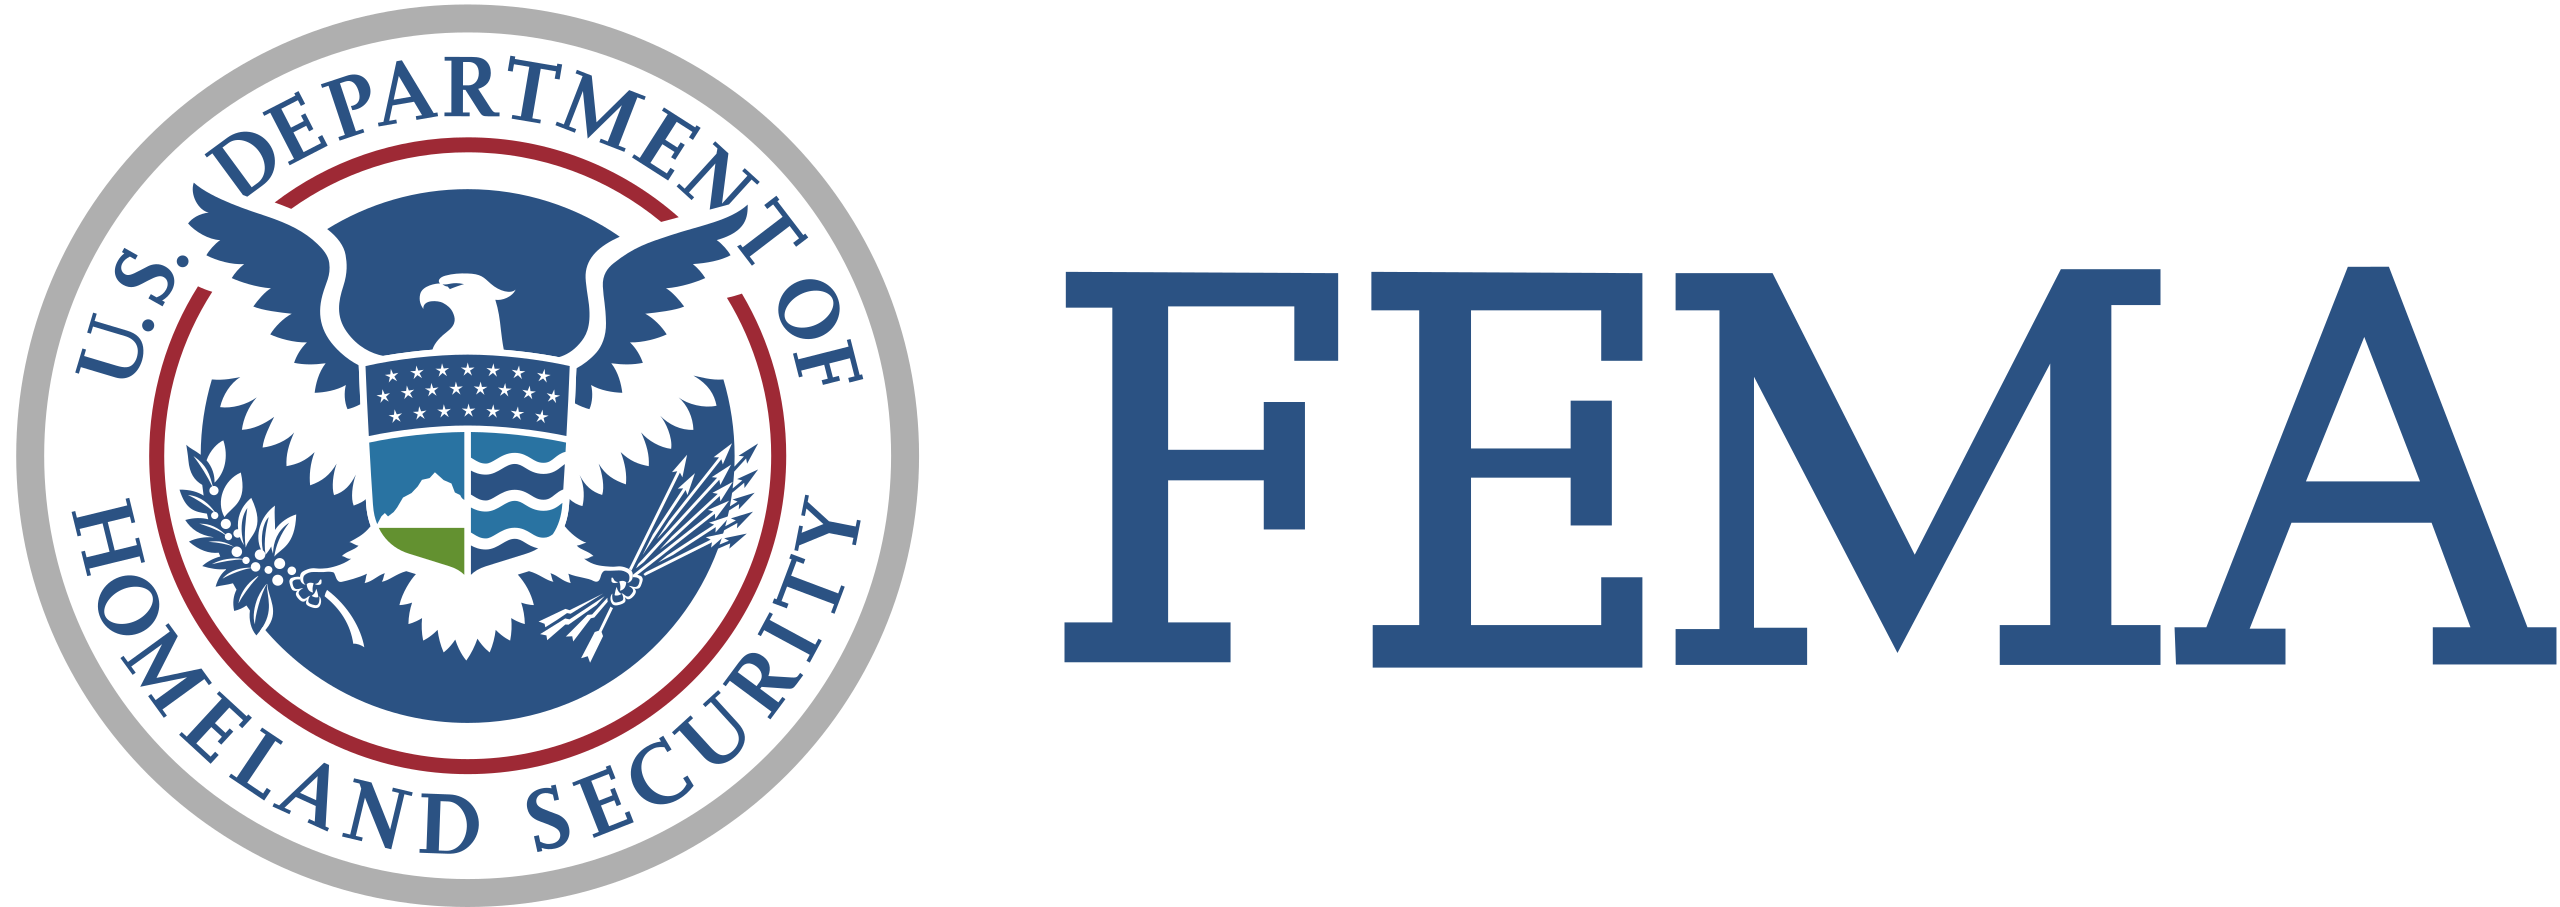 FEMA_logo.png